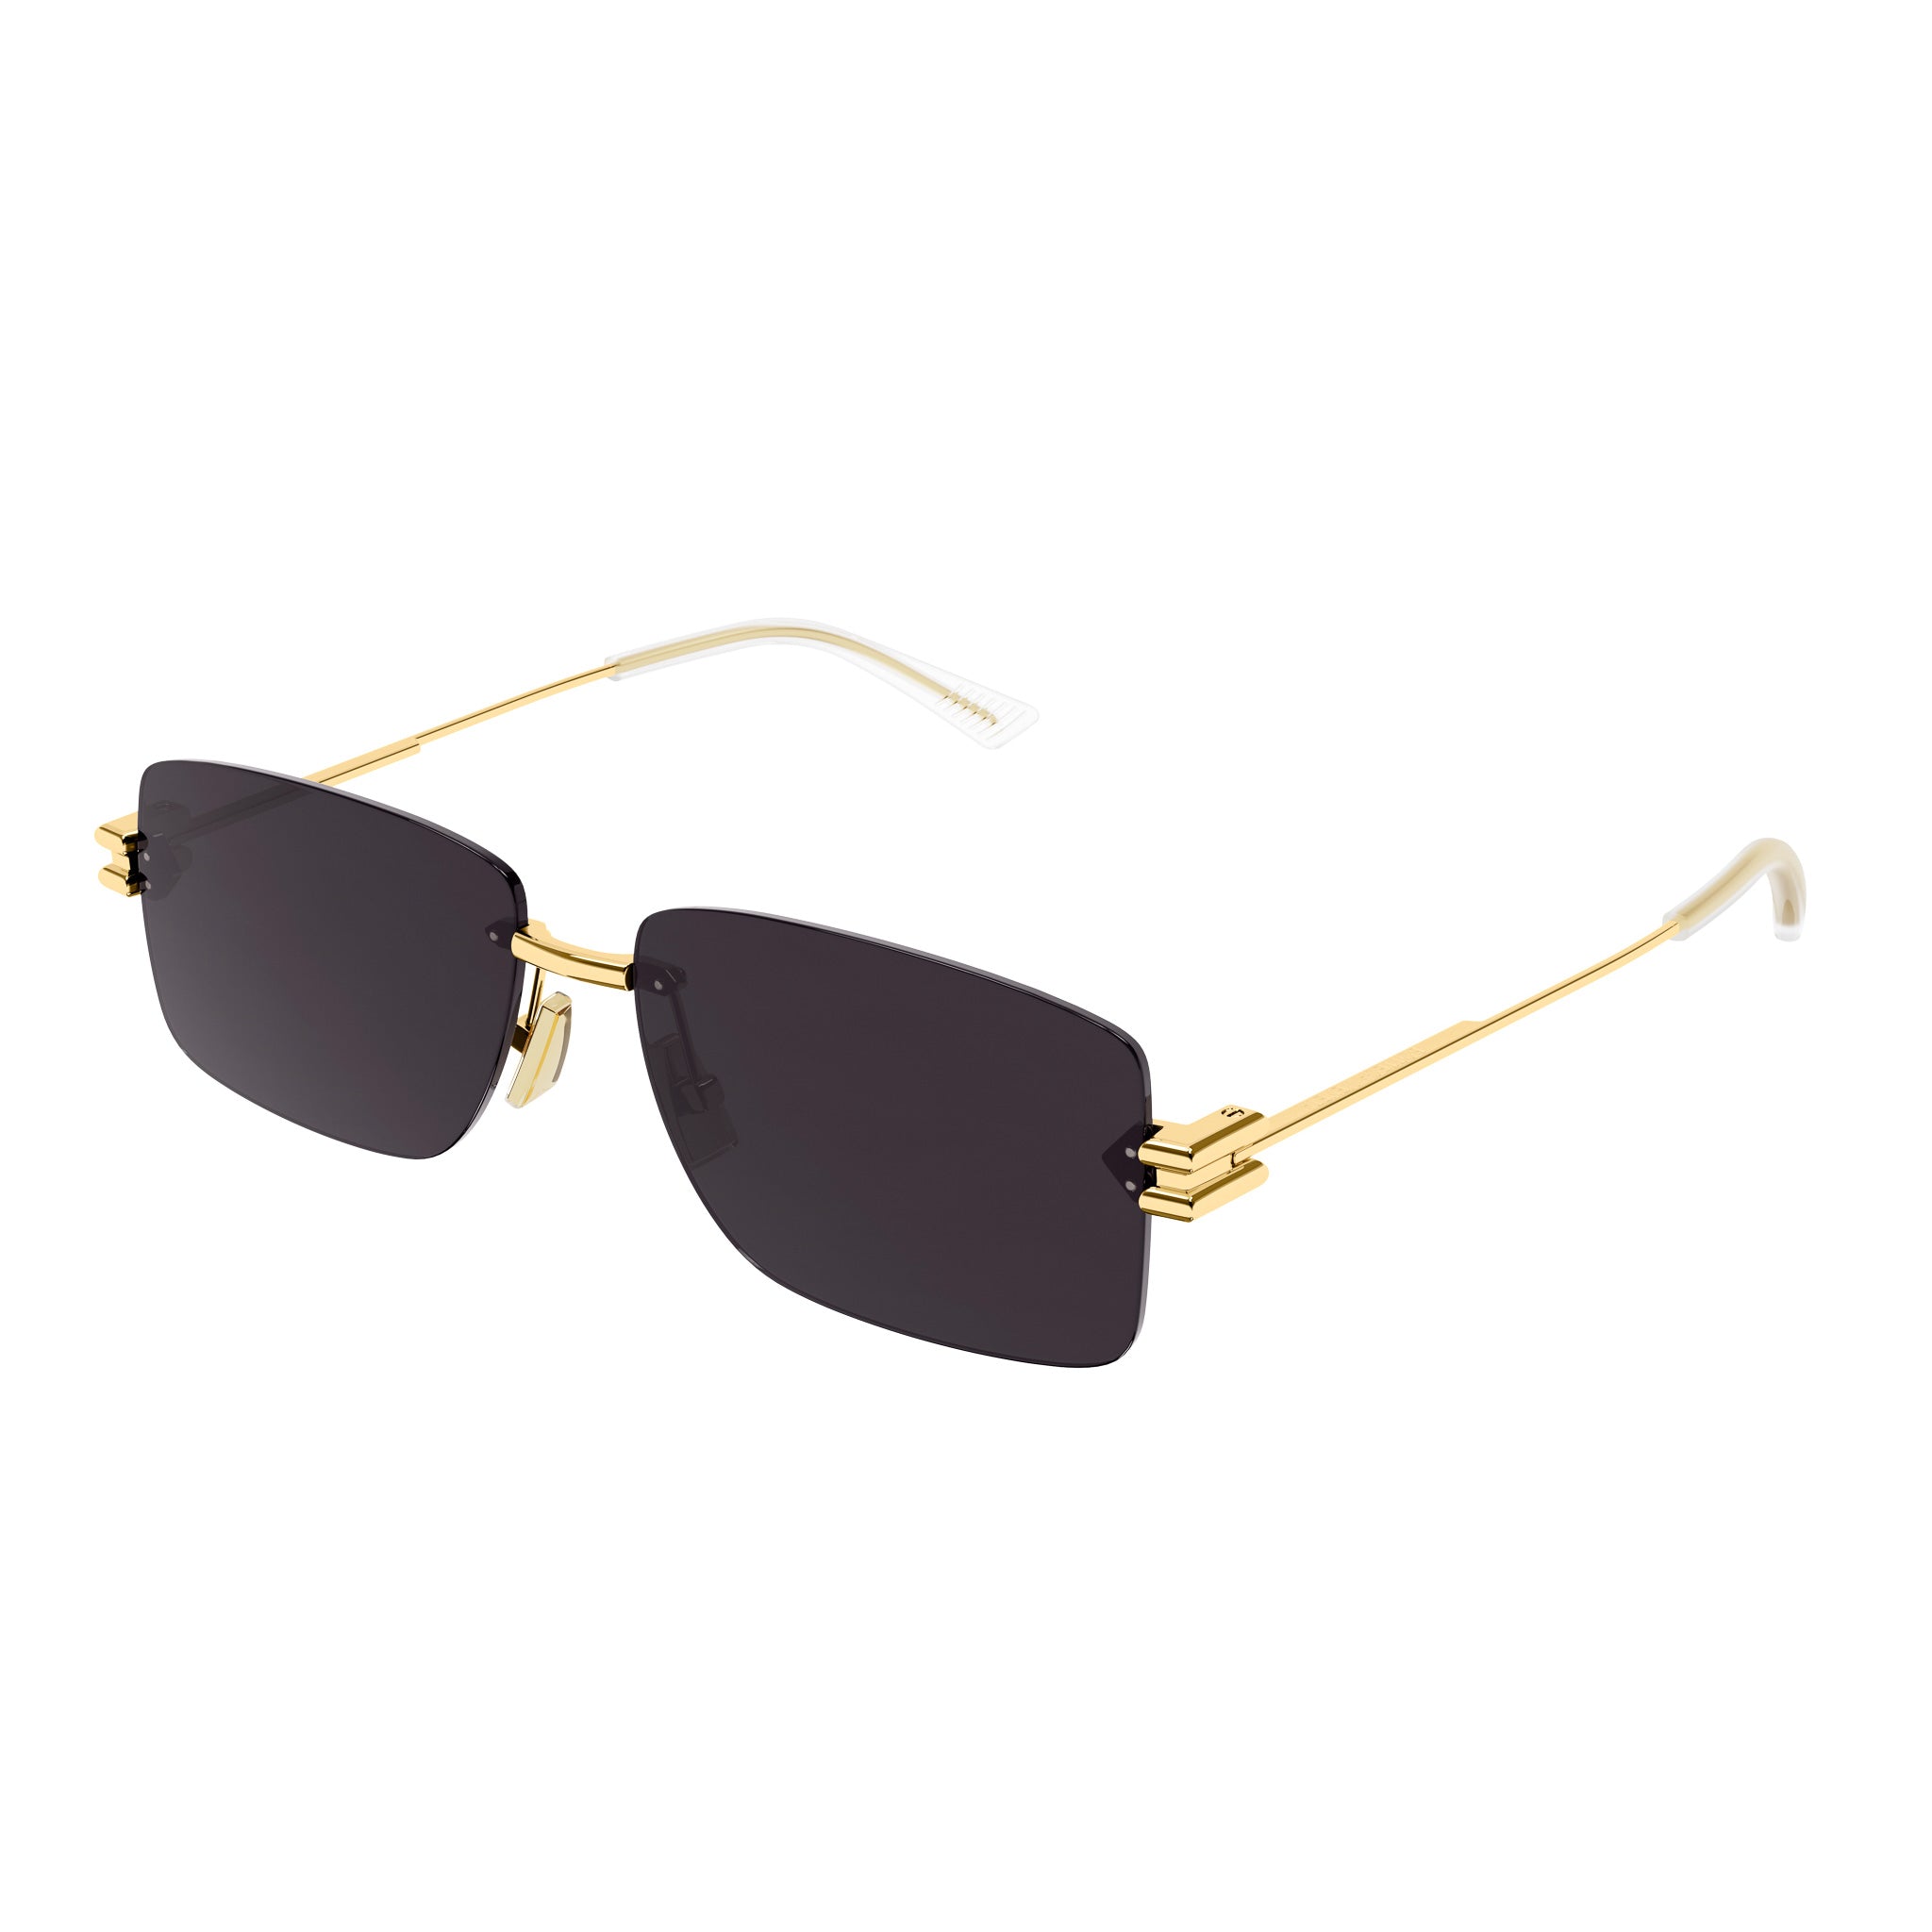 Sunglasses Saint Laurent New wave SL462 SULPICE 001 53-16 Black in stock, Price 219,08 €